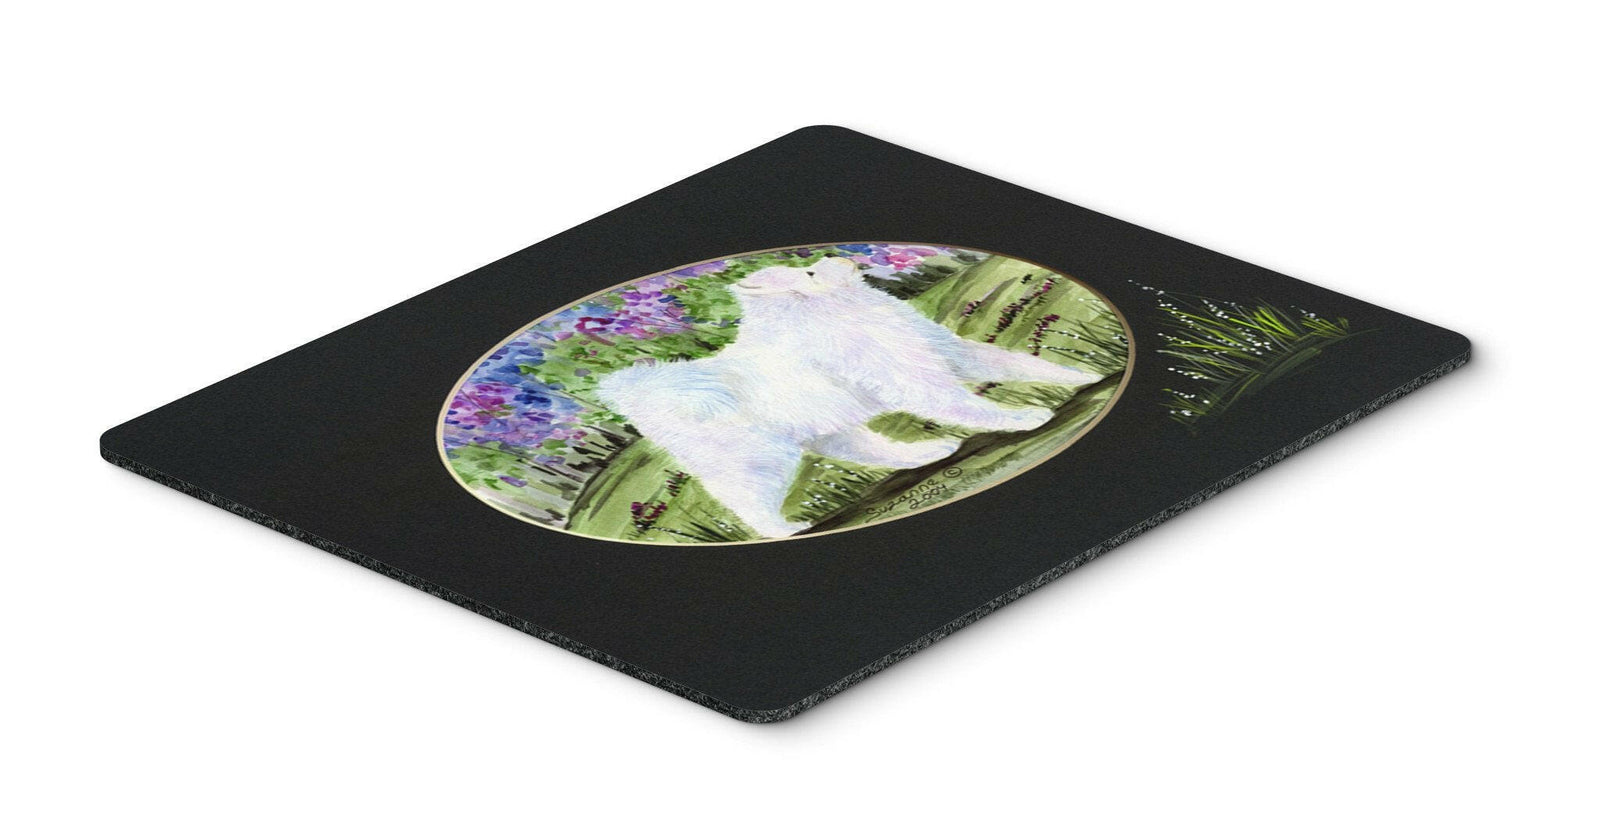 Samoyed  Mouse Pad / Hot Pad / Trivet by Caroline's Treasures